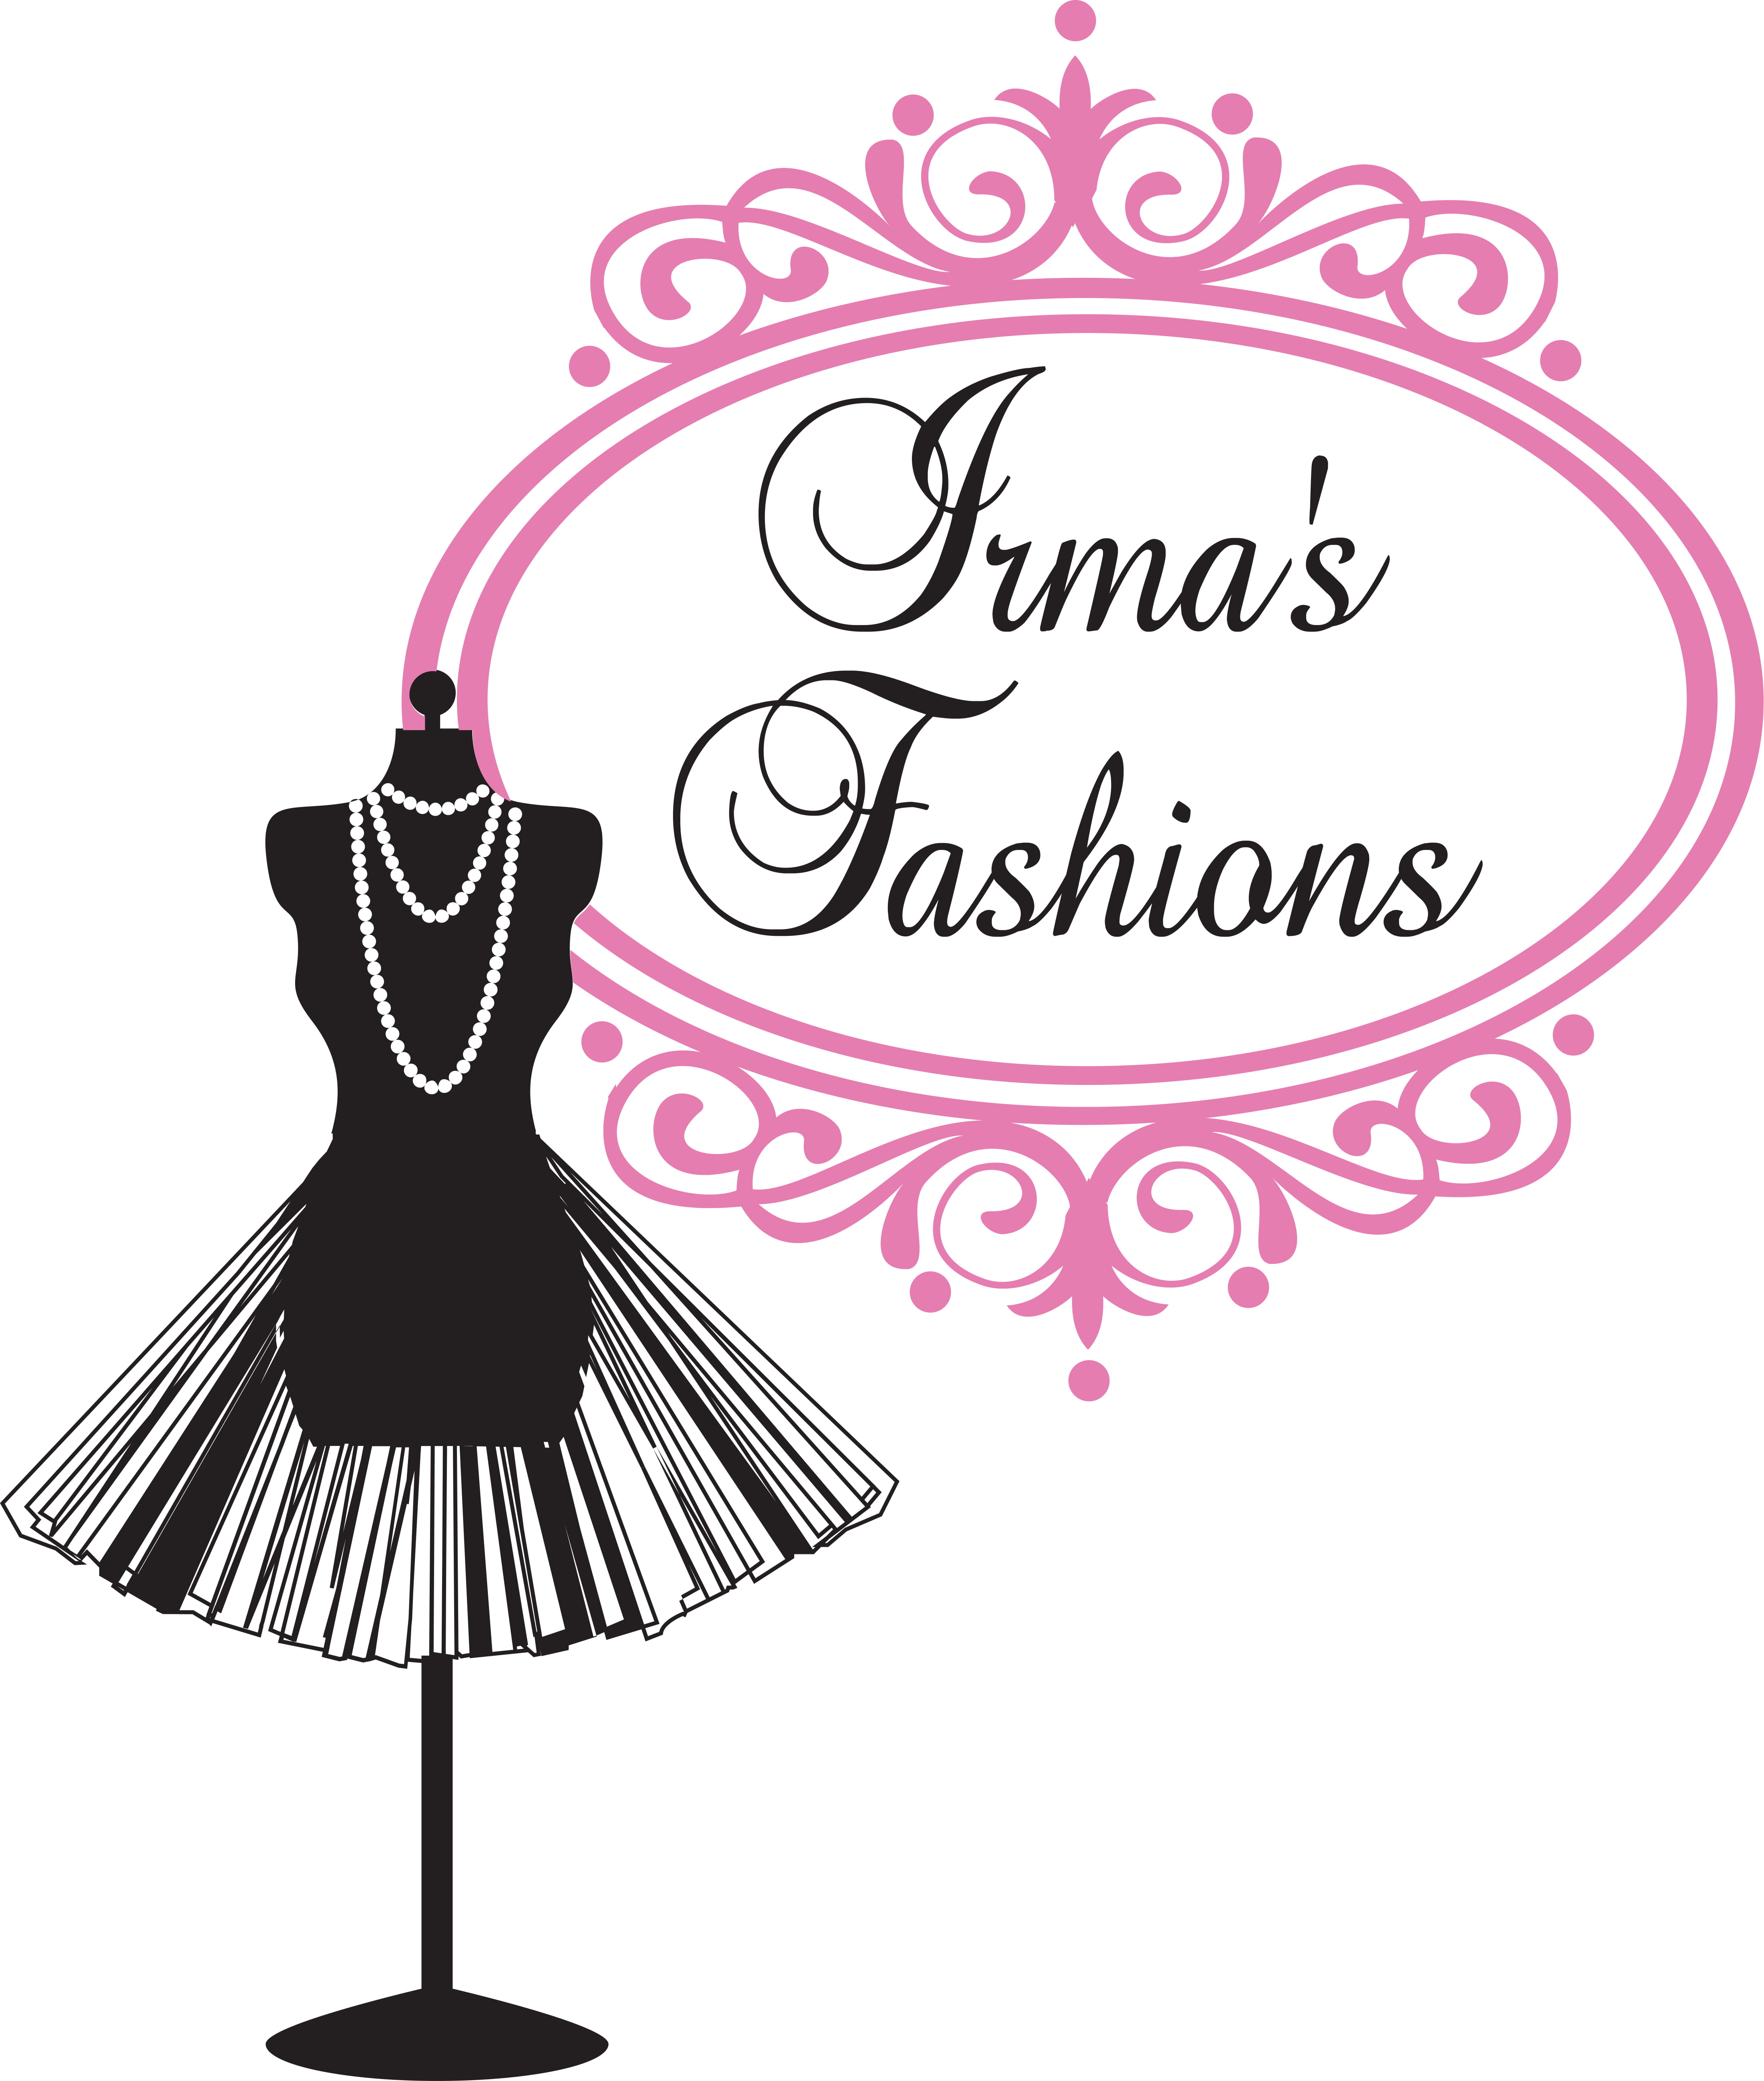 Irma's Fashions